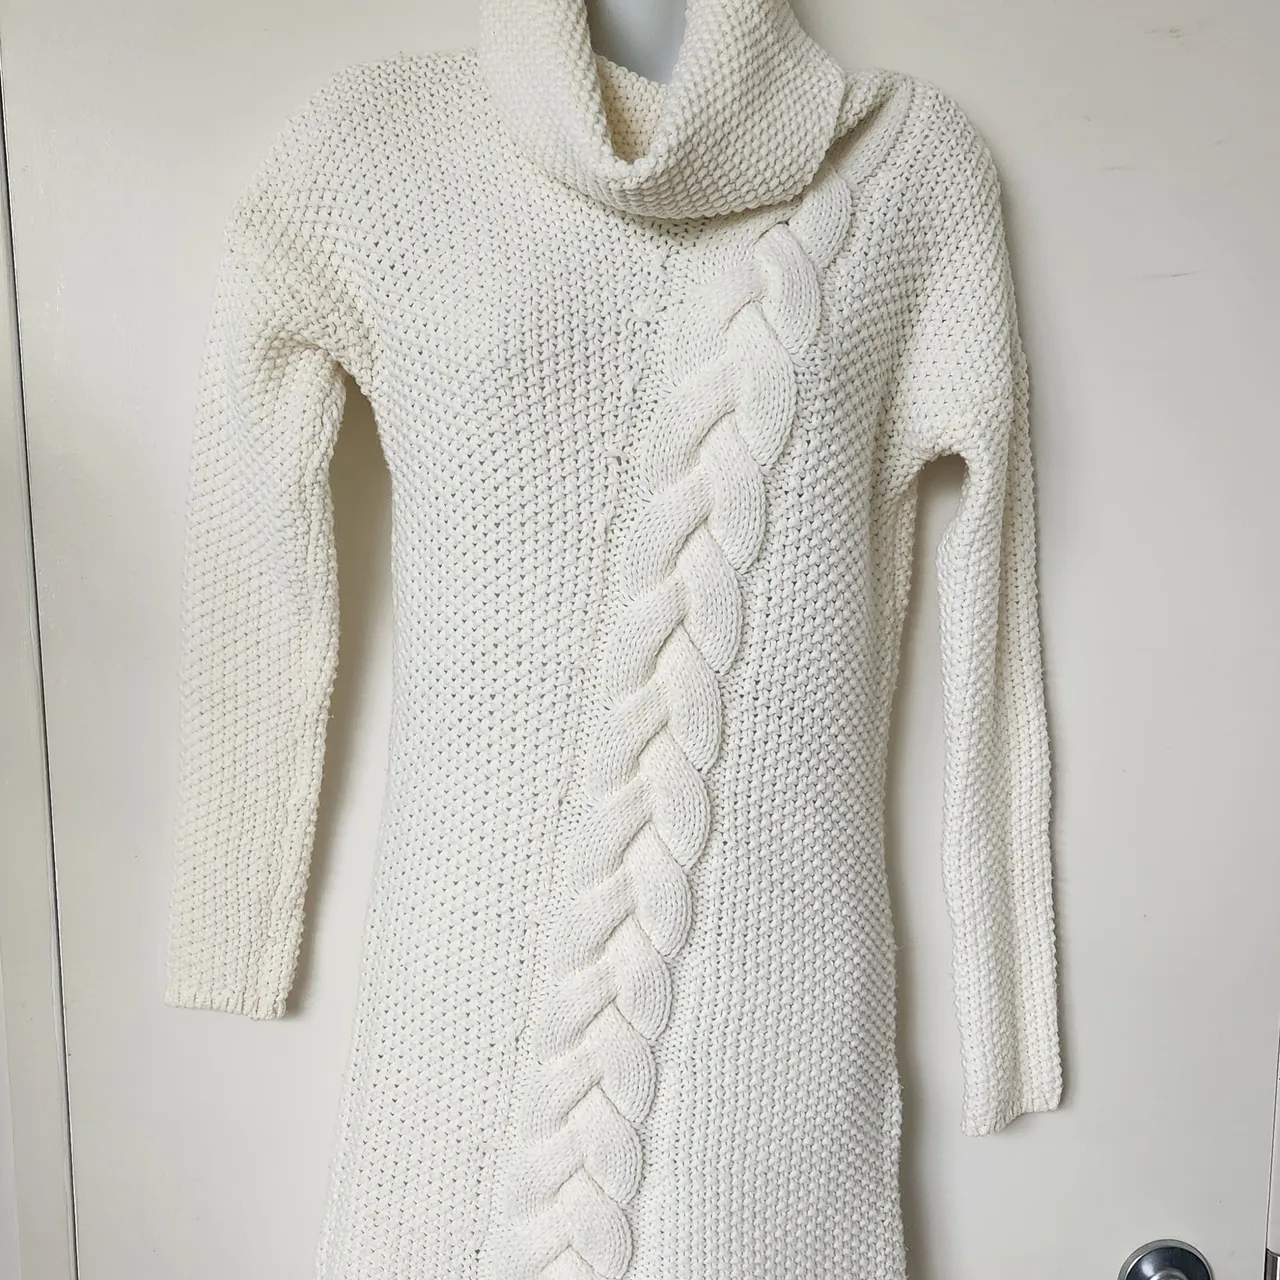 Ricki's cream white knit sweater dress photo 1